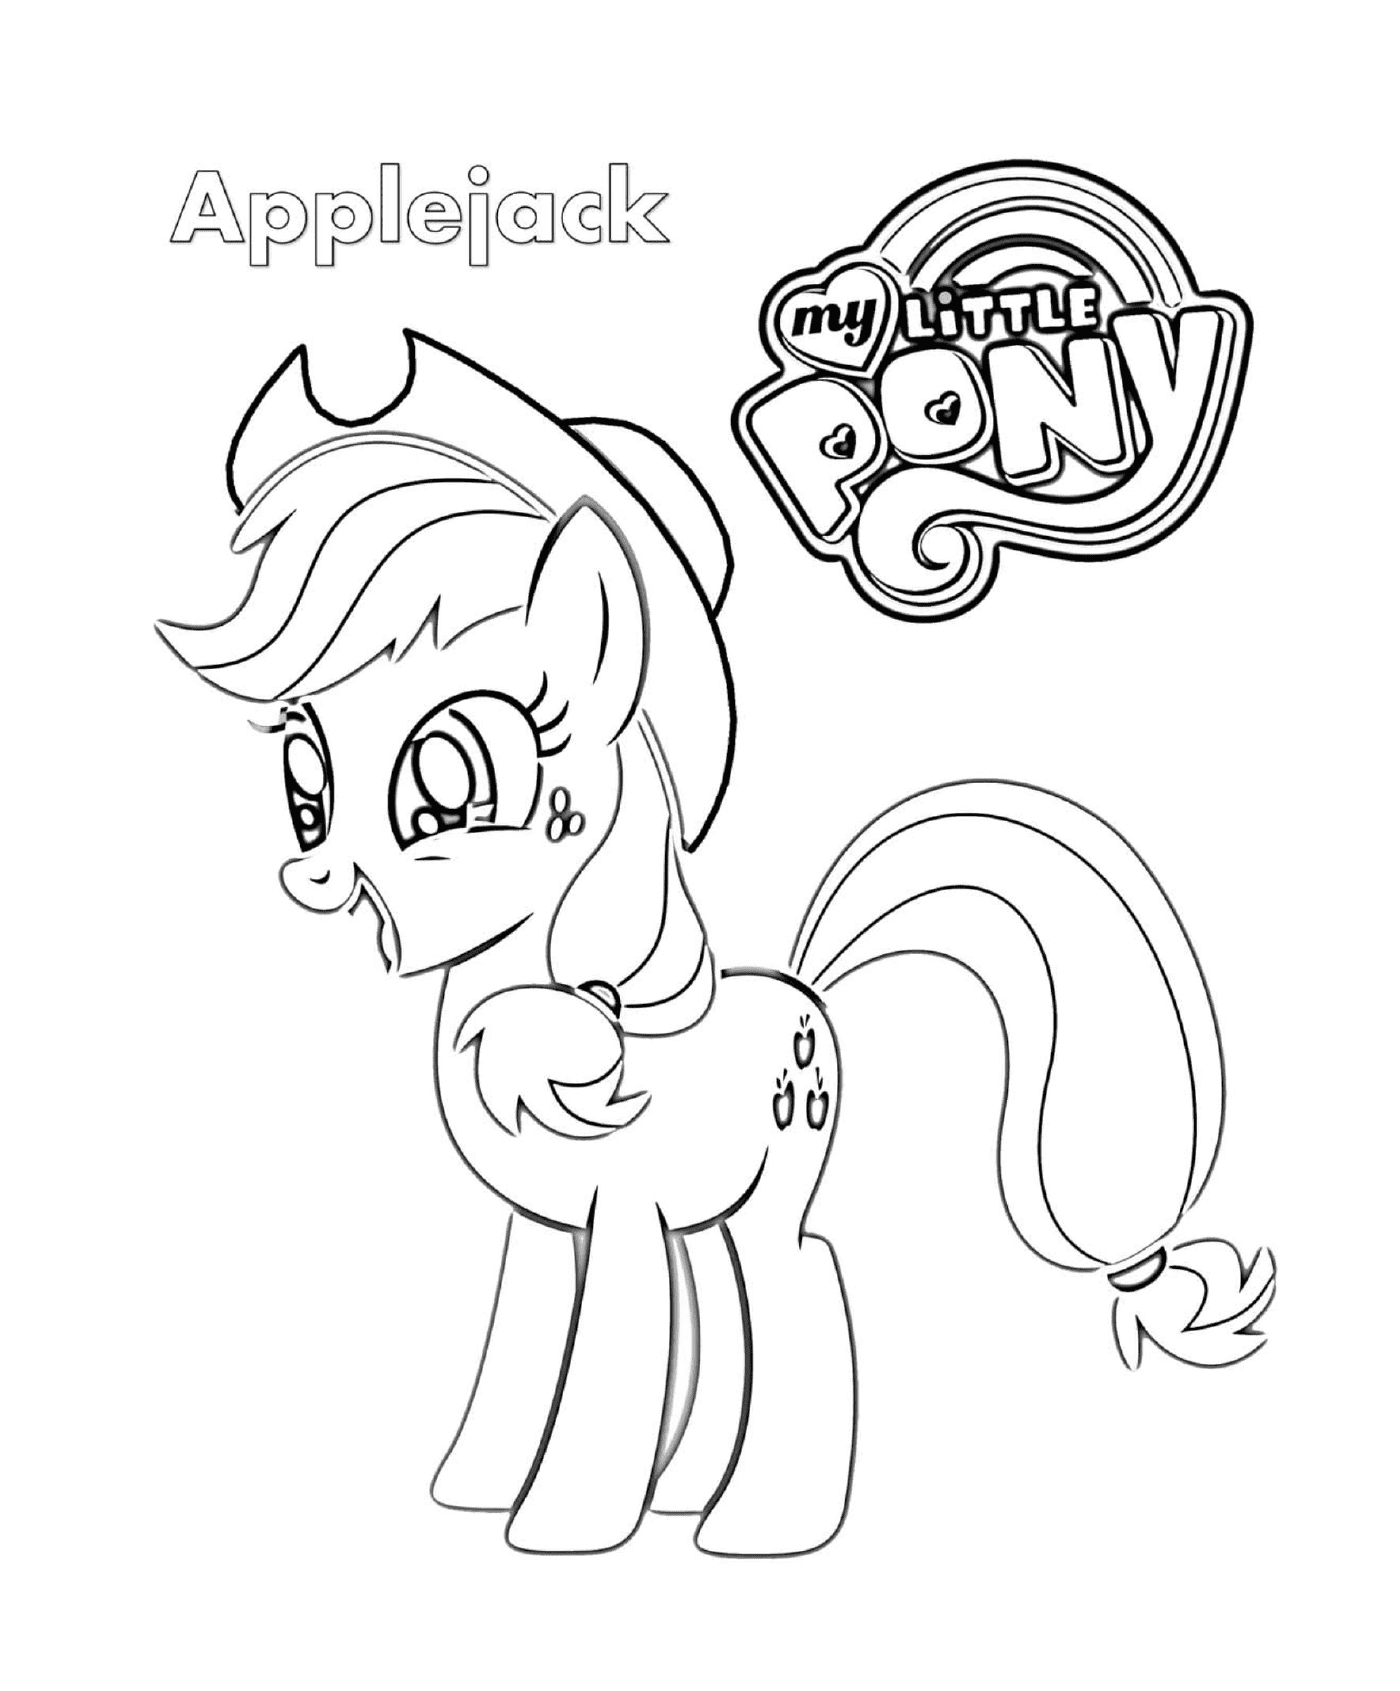  Applejack, a cute pony 